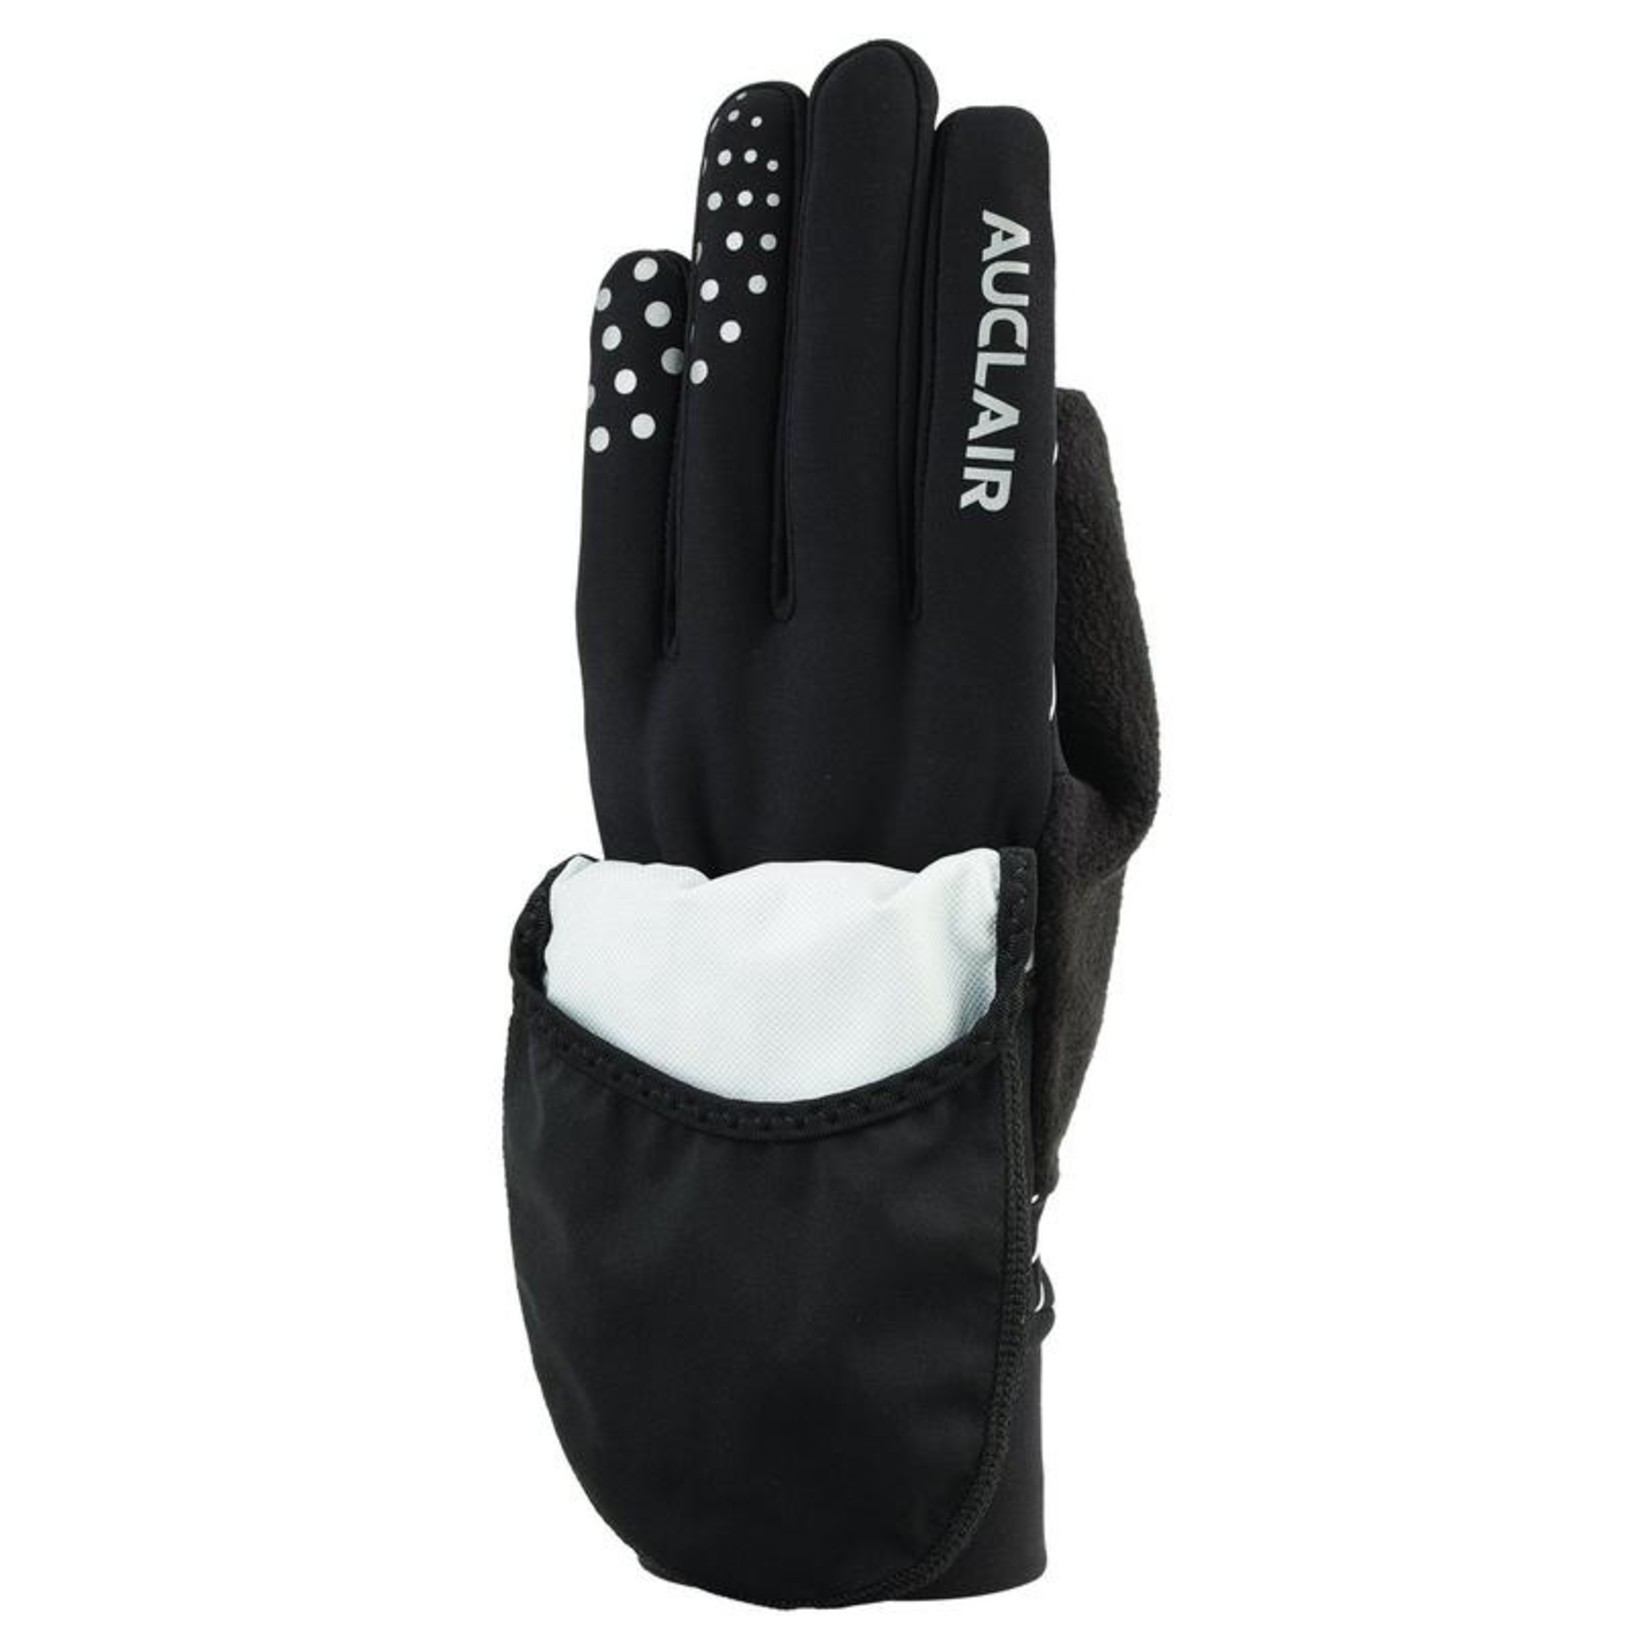 Auclair Auclair Impulse II Glove with Wind Cover